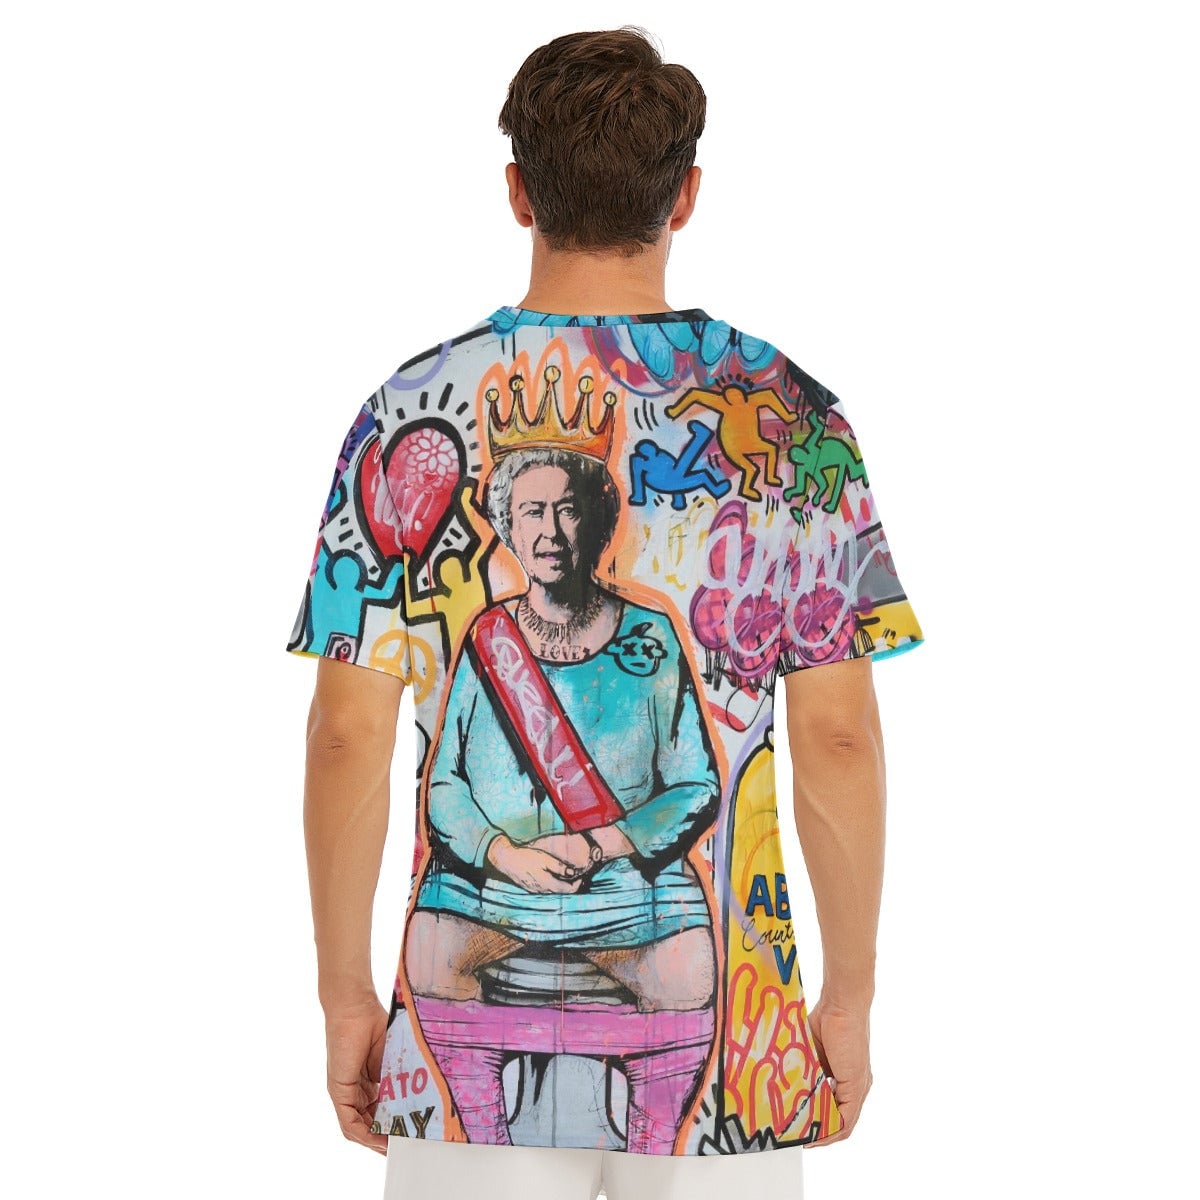 Iconic British Royal Pop Art Surrealism Collage T-Shirt